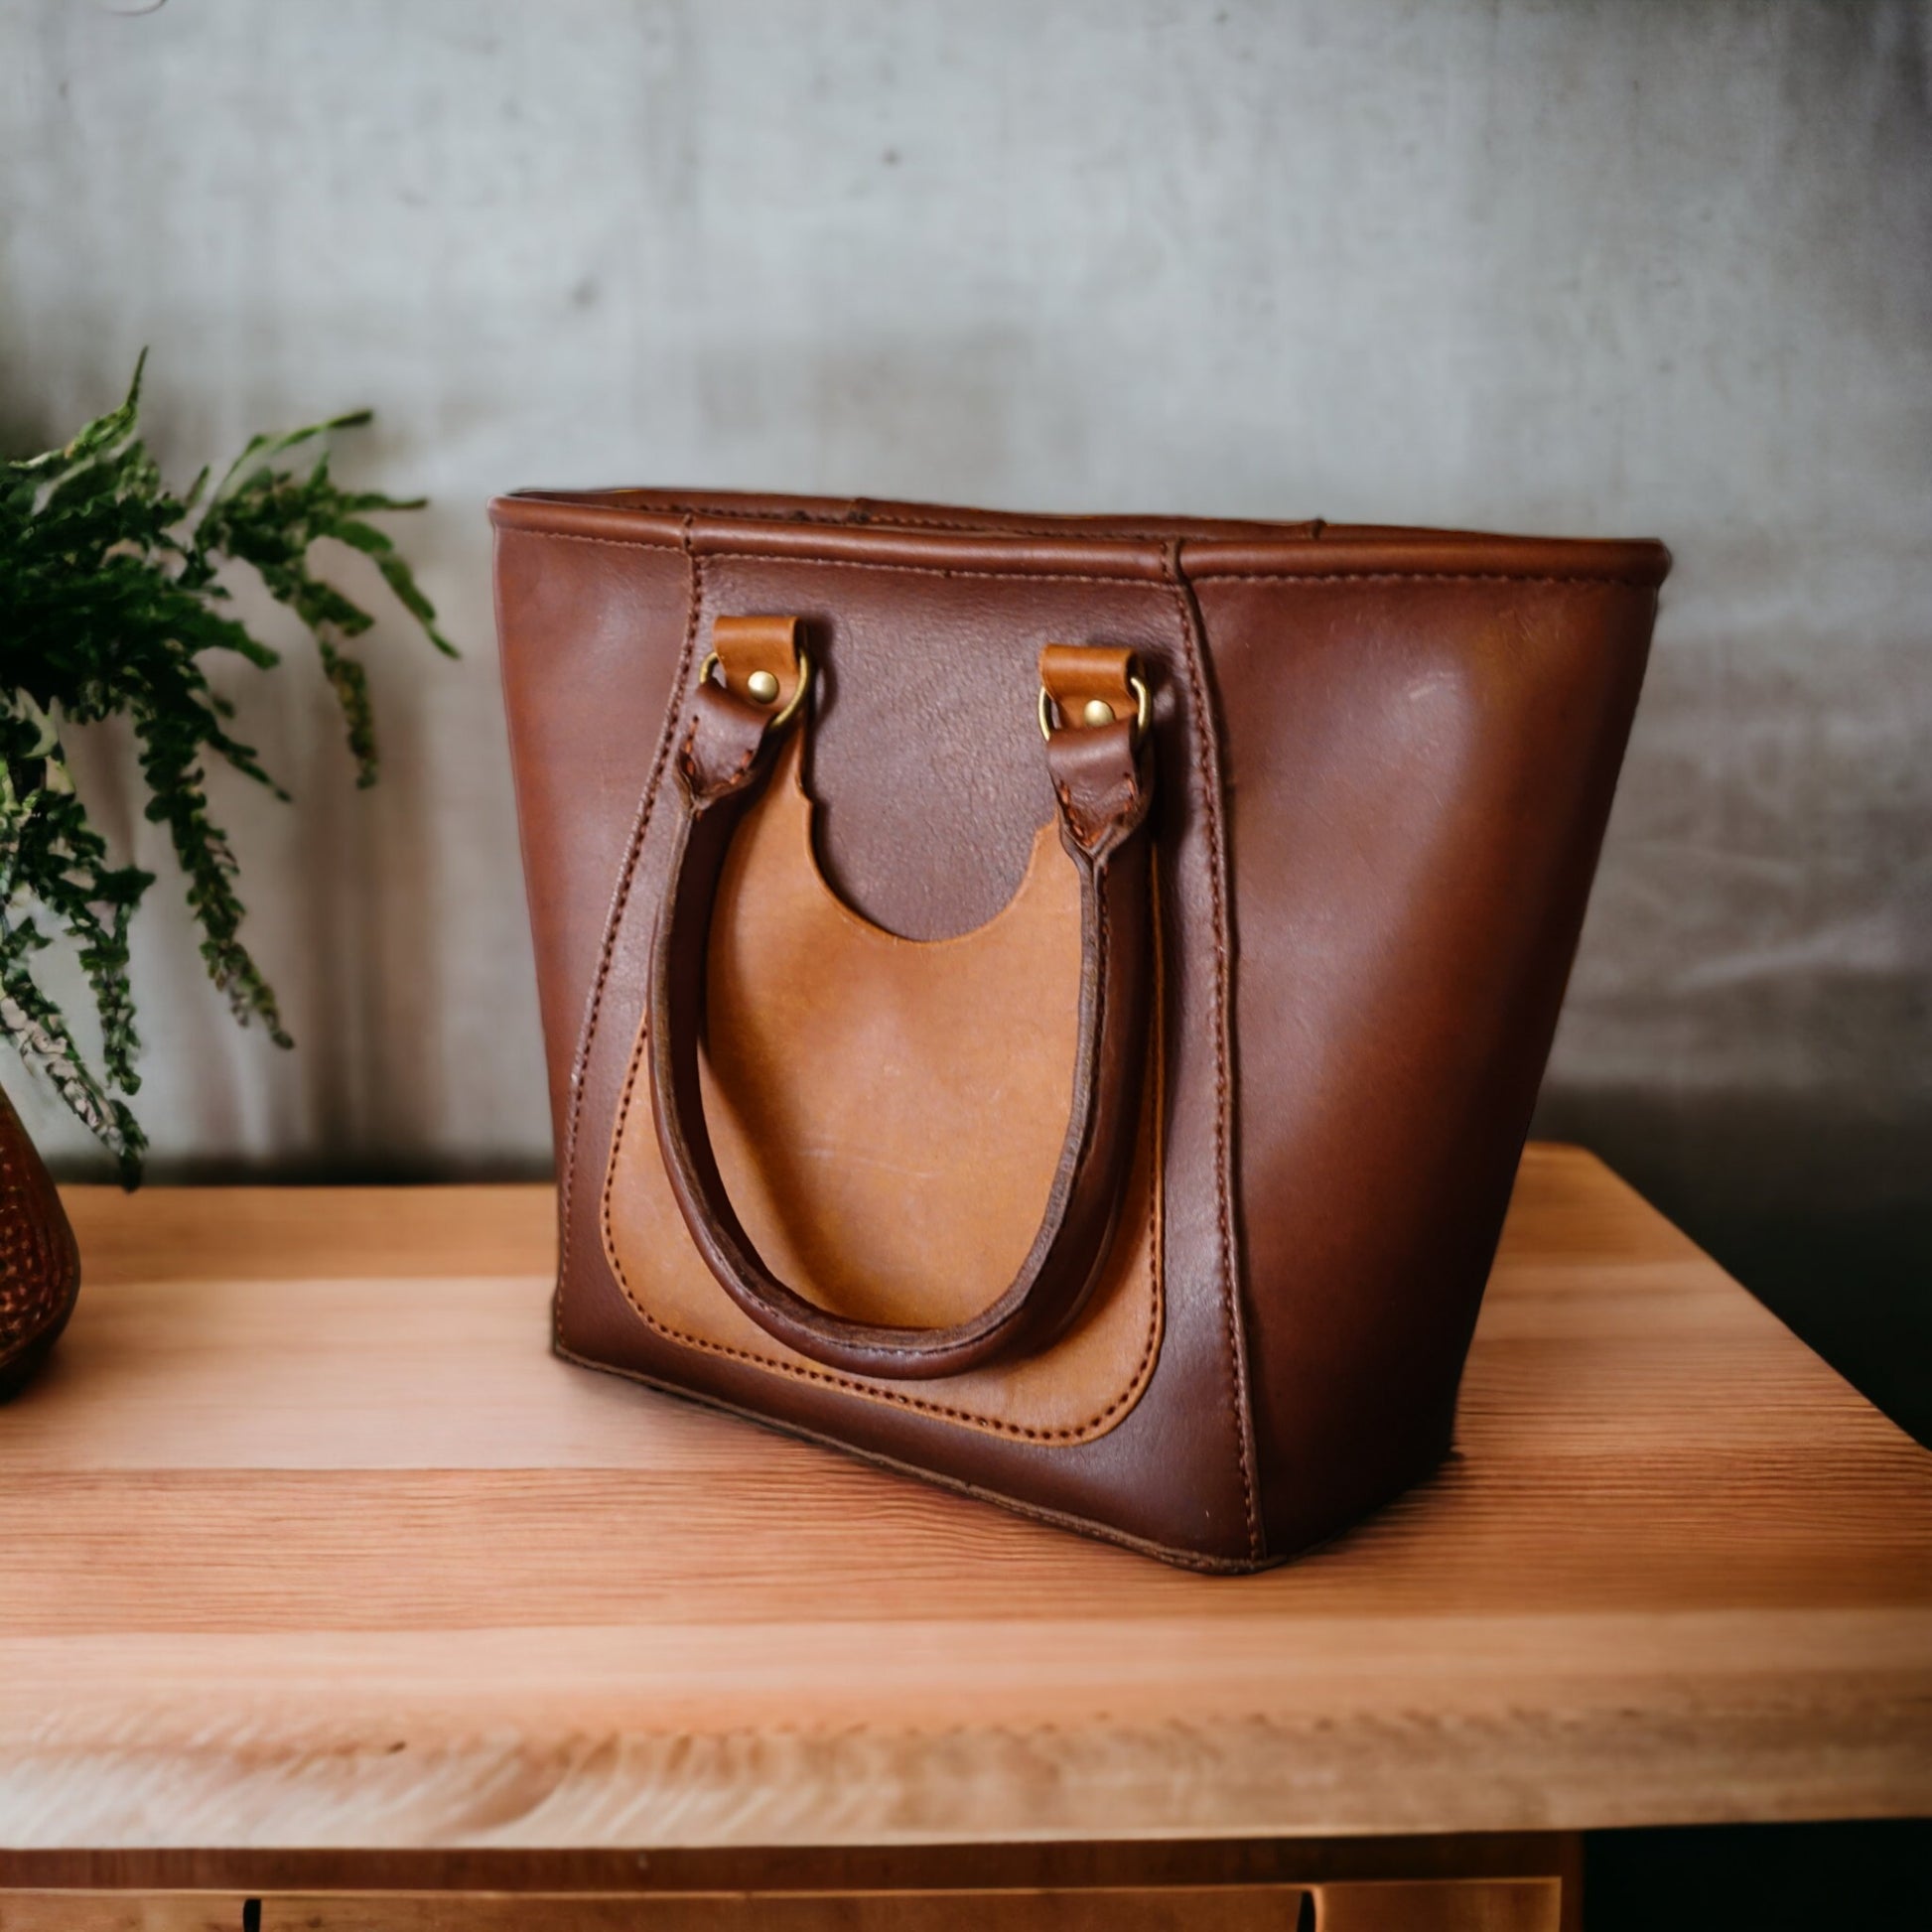 rgc handmade palermo tote leather handbag 